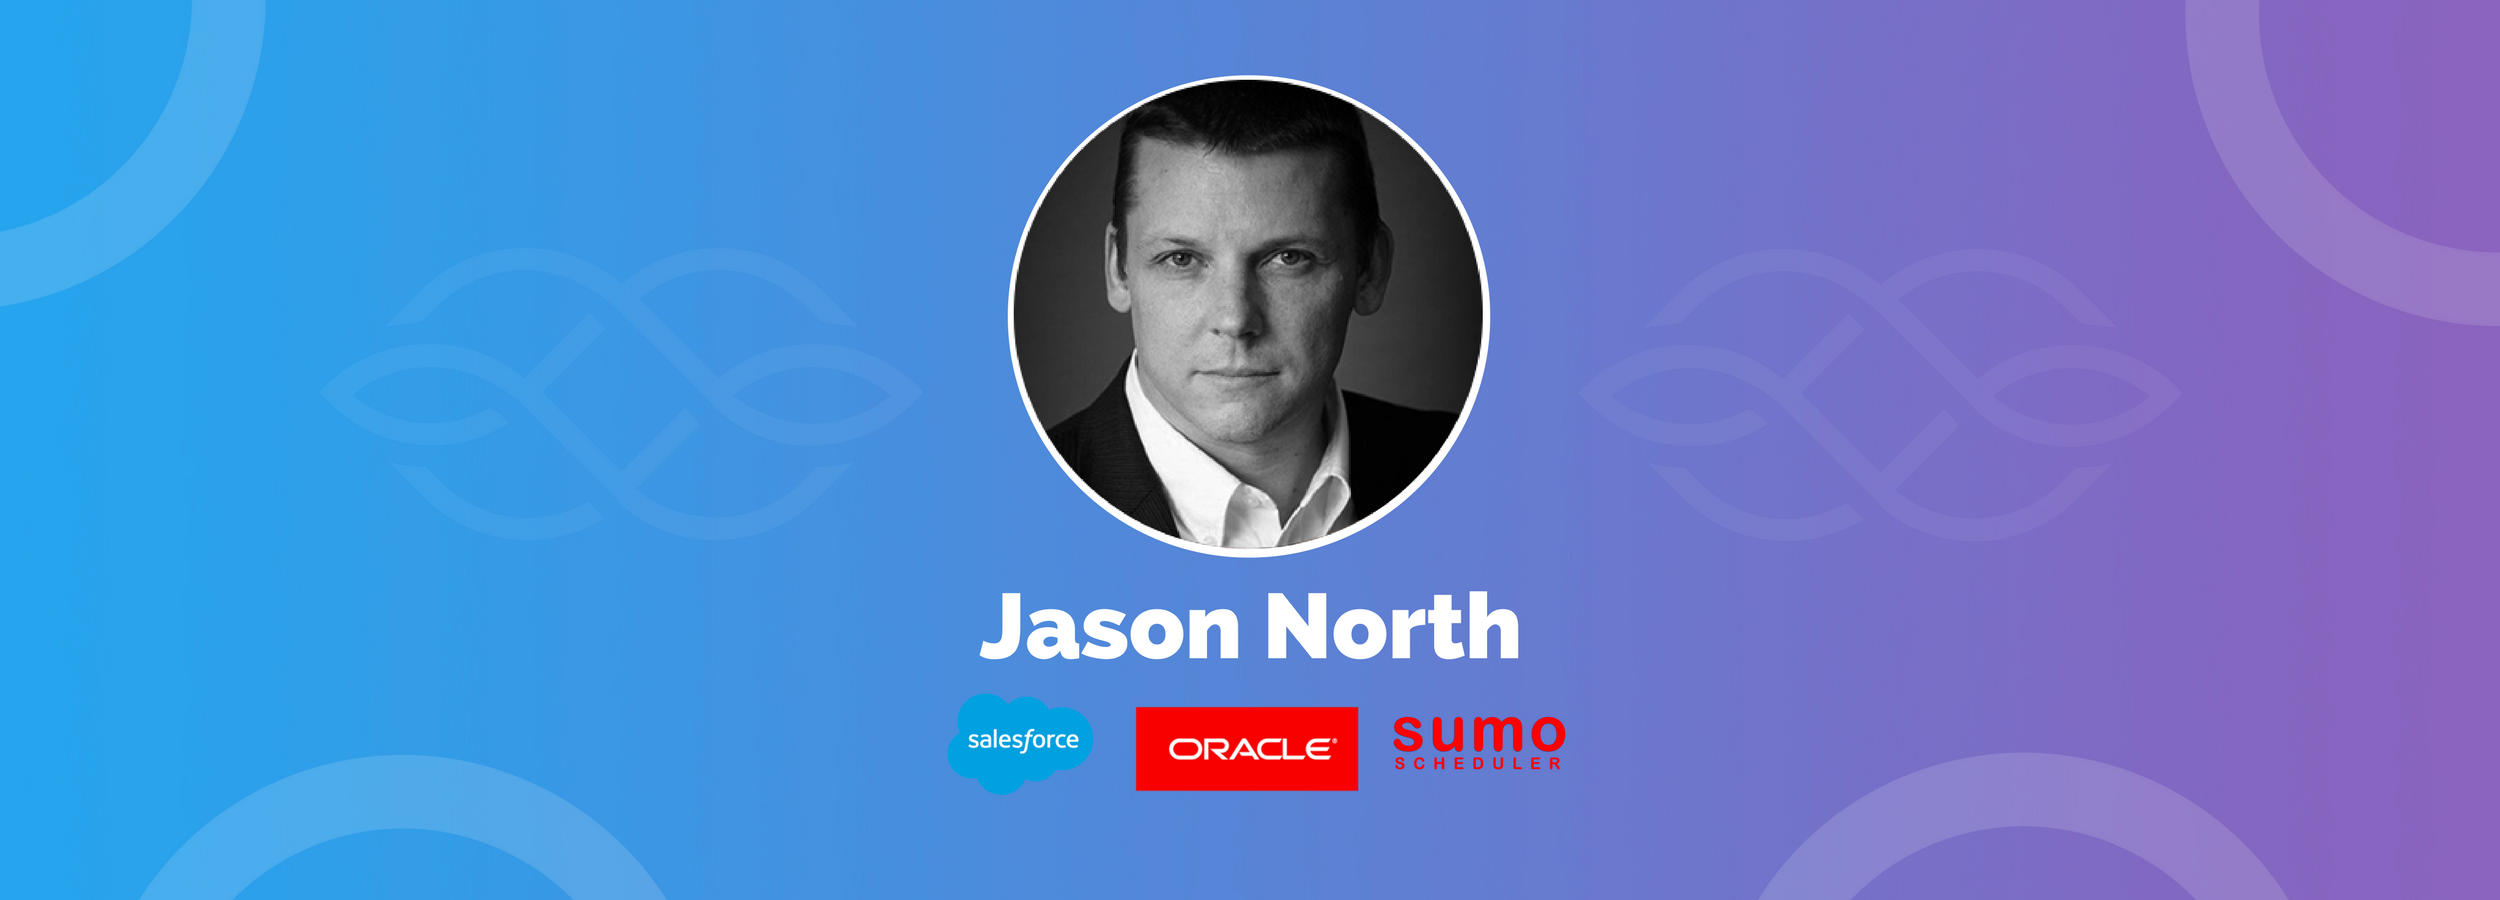 Meet our new business development advisor, Jason North!